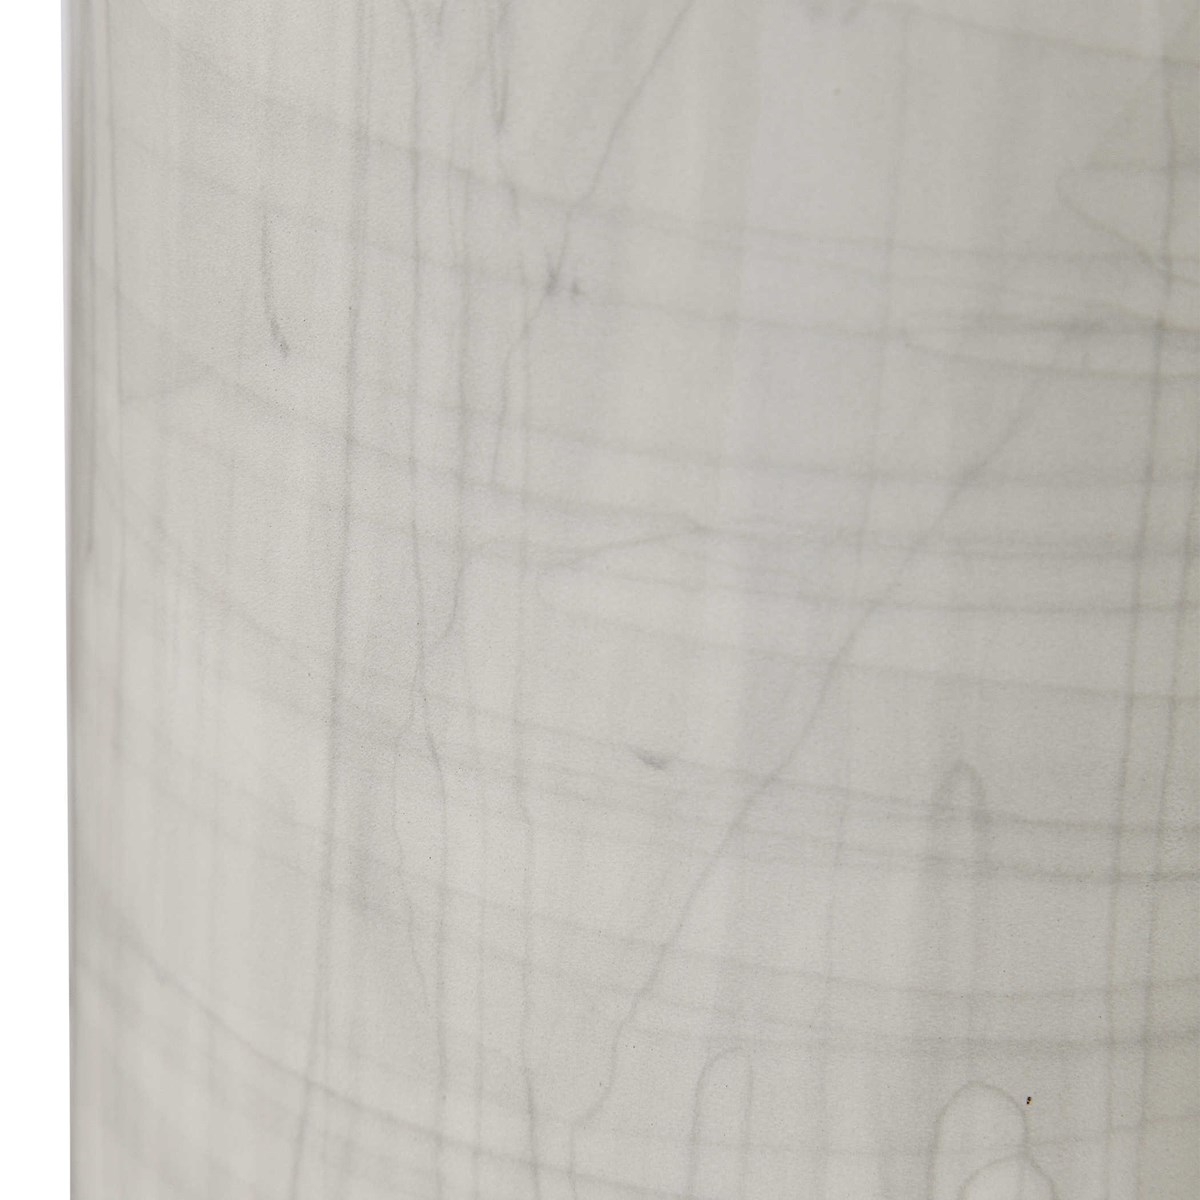 ZESIRO TABLE LAMP - Image 3